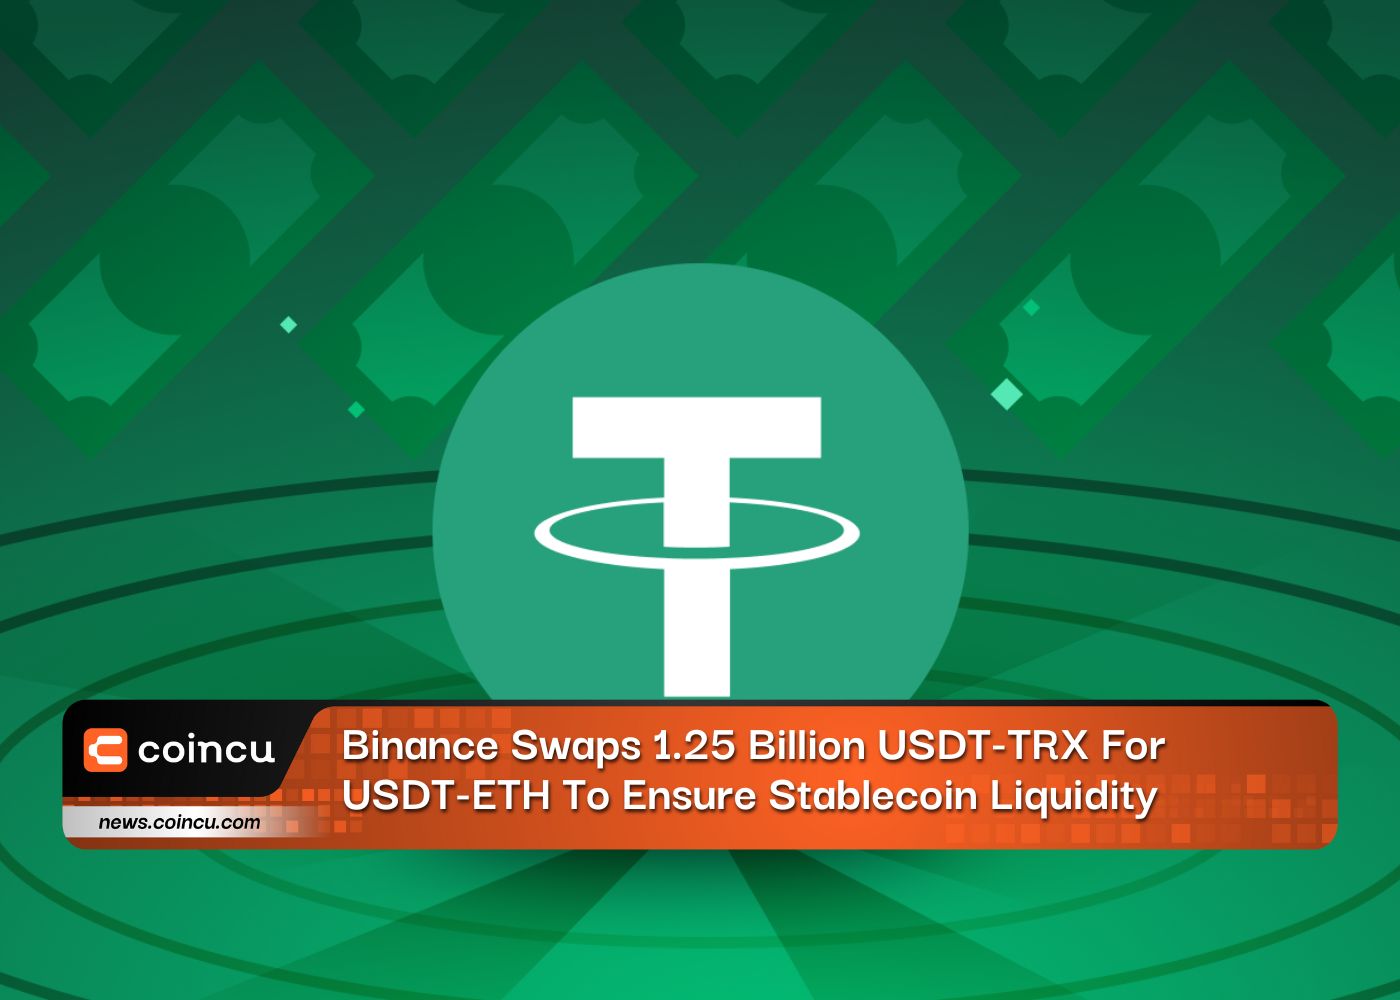 Binance Swaps 1.25 Billion USDT-TRX For USDT-ETH To Ensure Stablecoin Liquidity